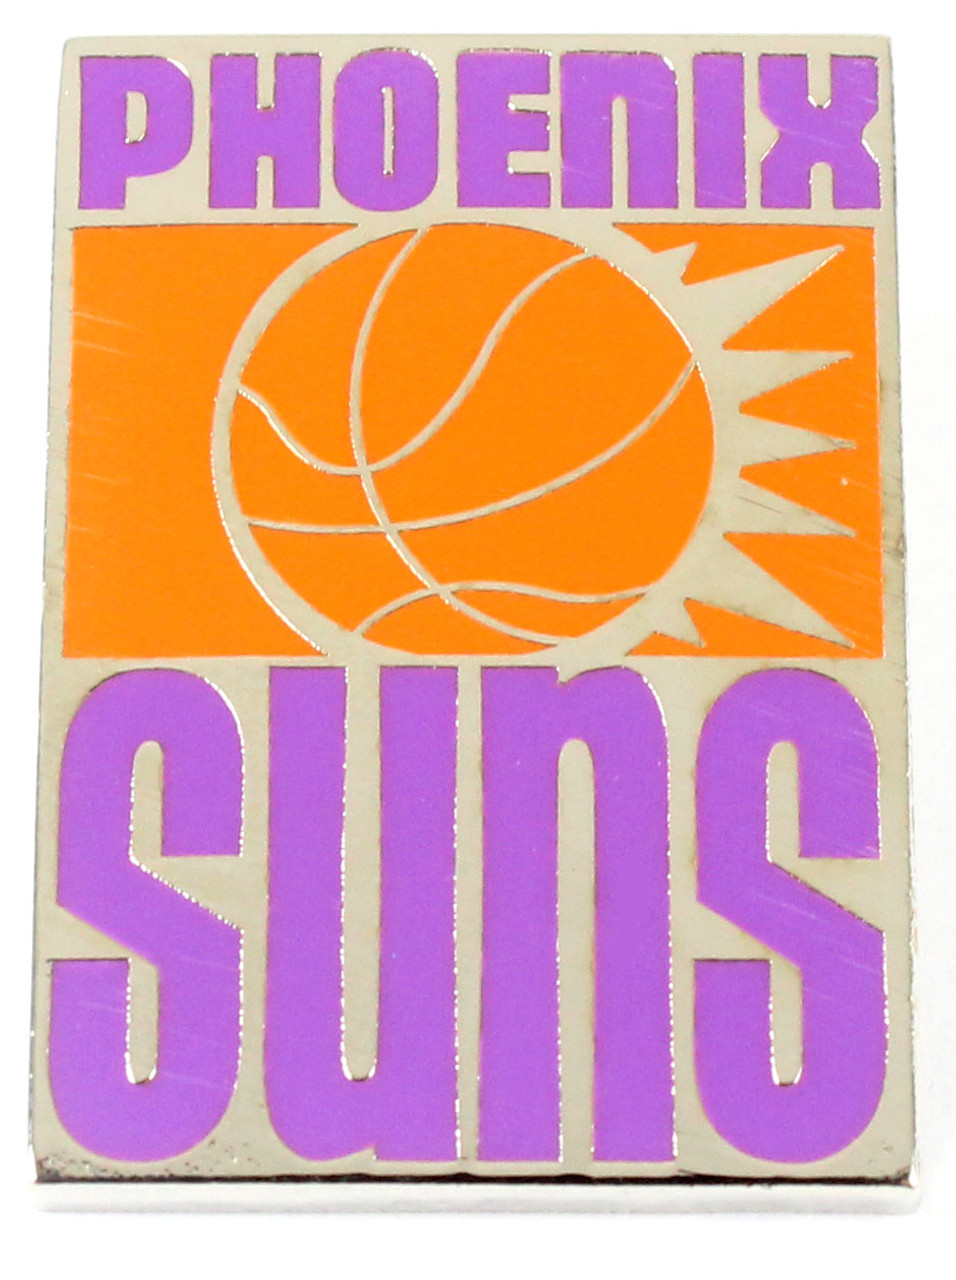 phoenix suns logo history